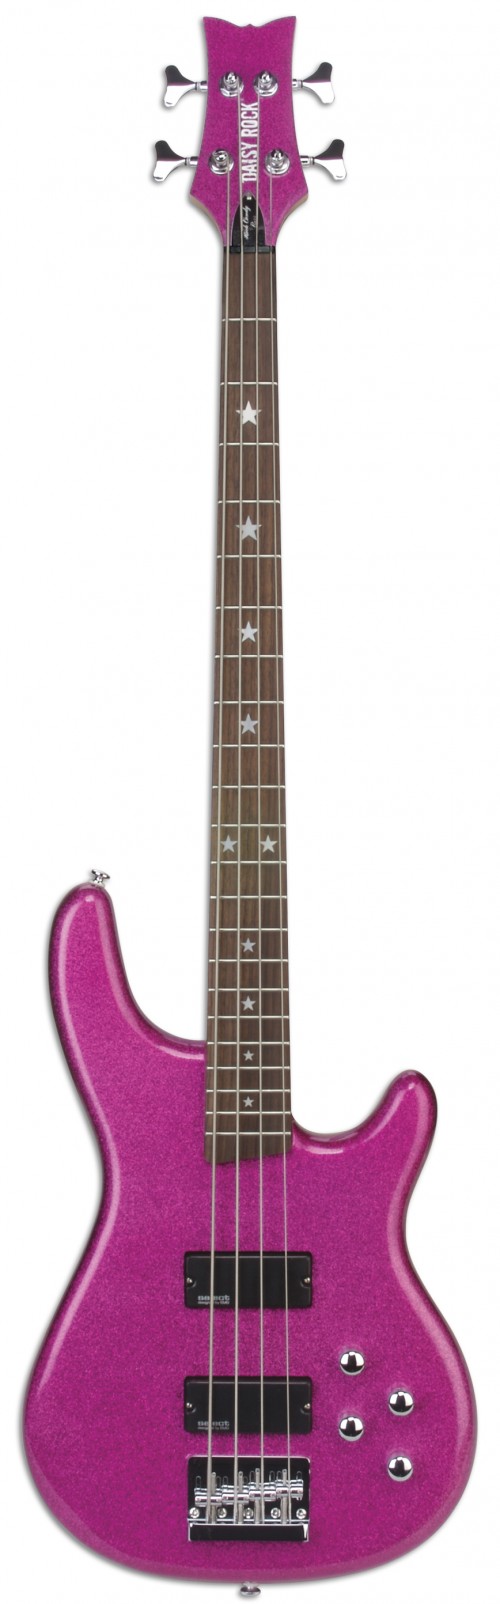 Rock Candy Bass | Daisy Rock Guitars the Girl Guitar Company